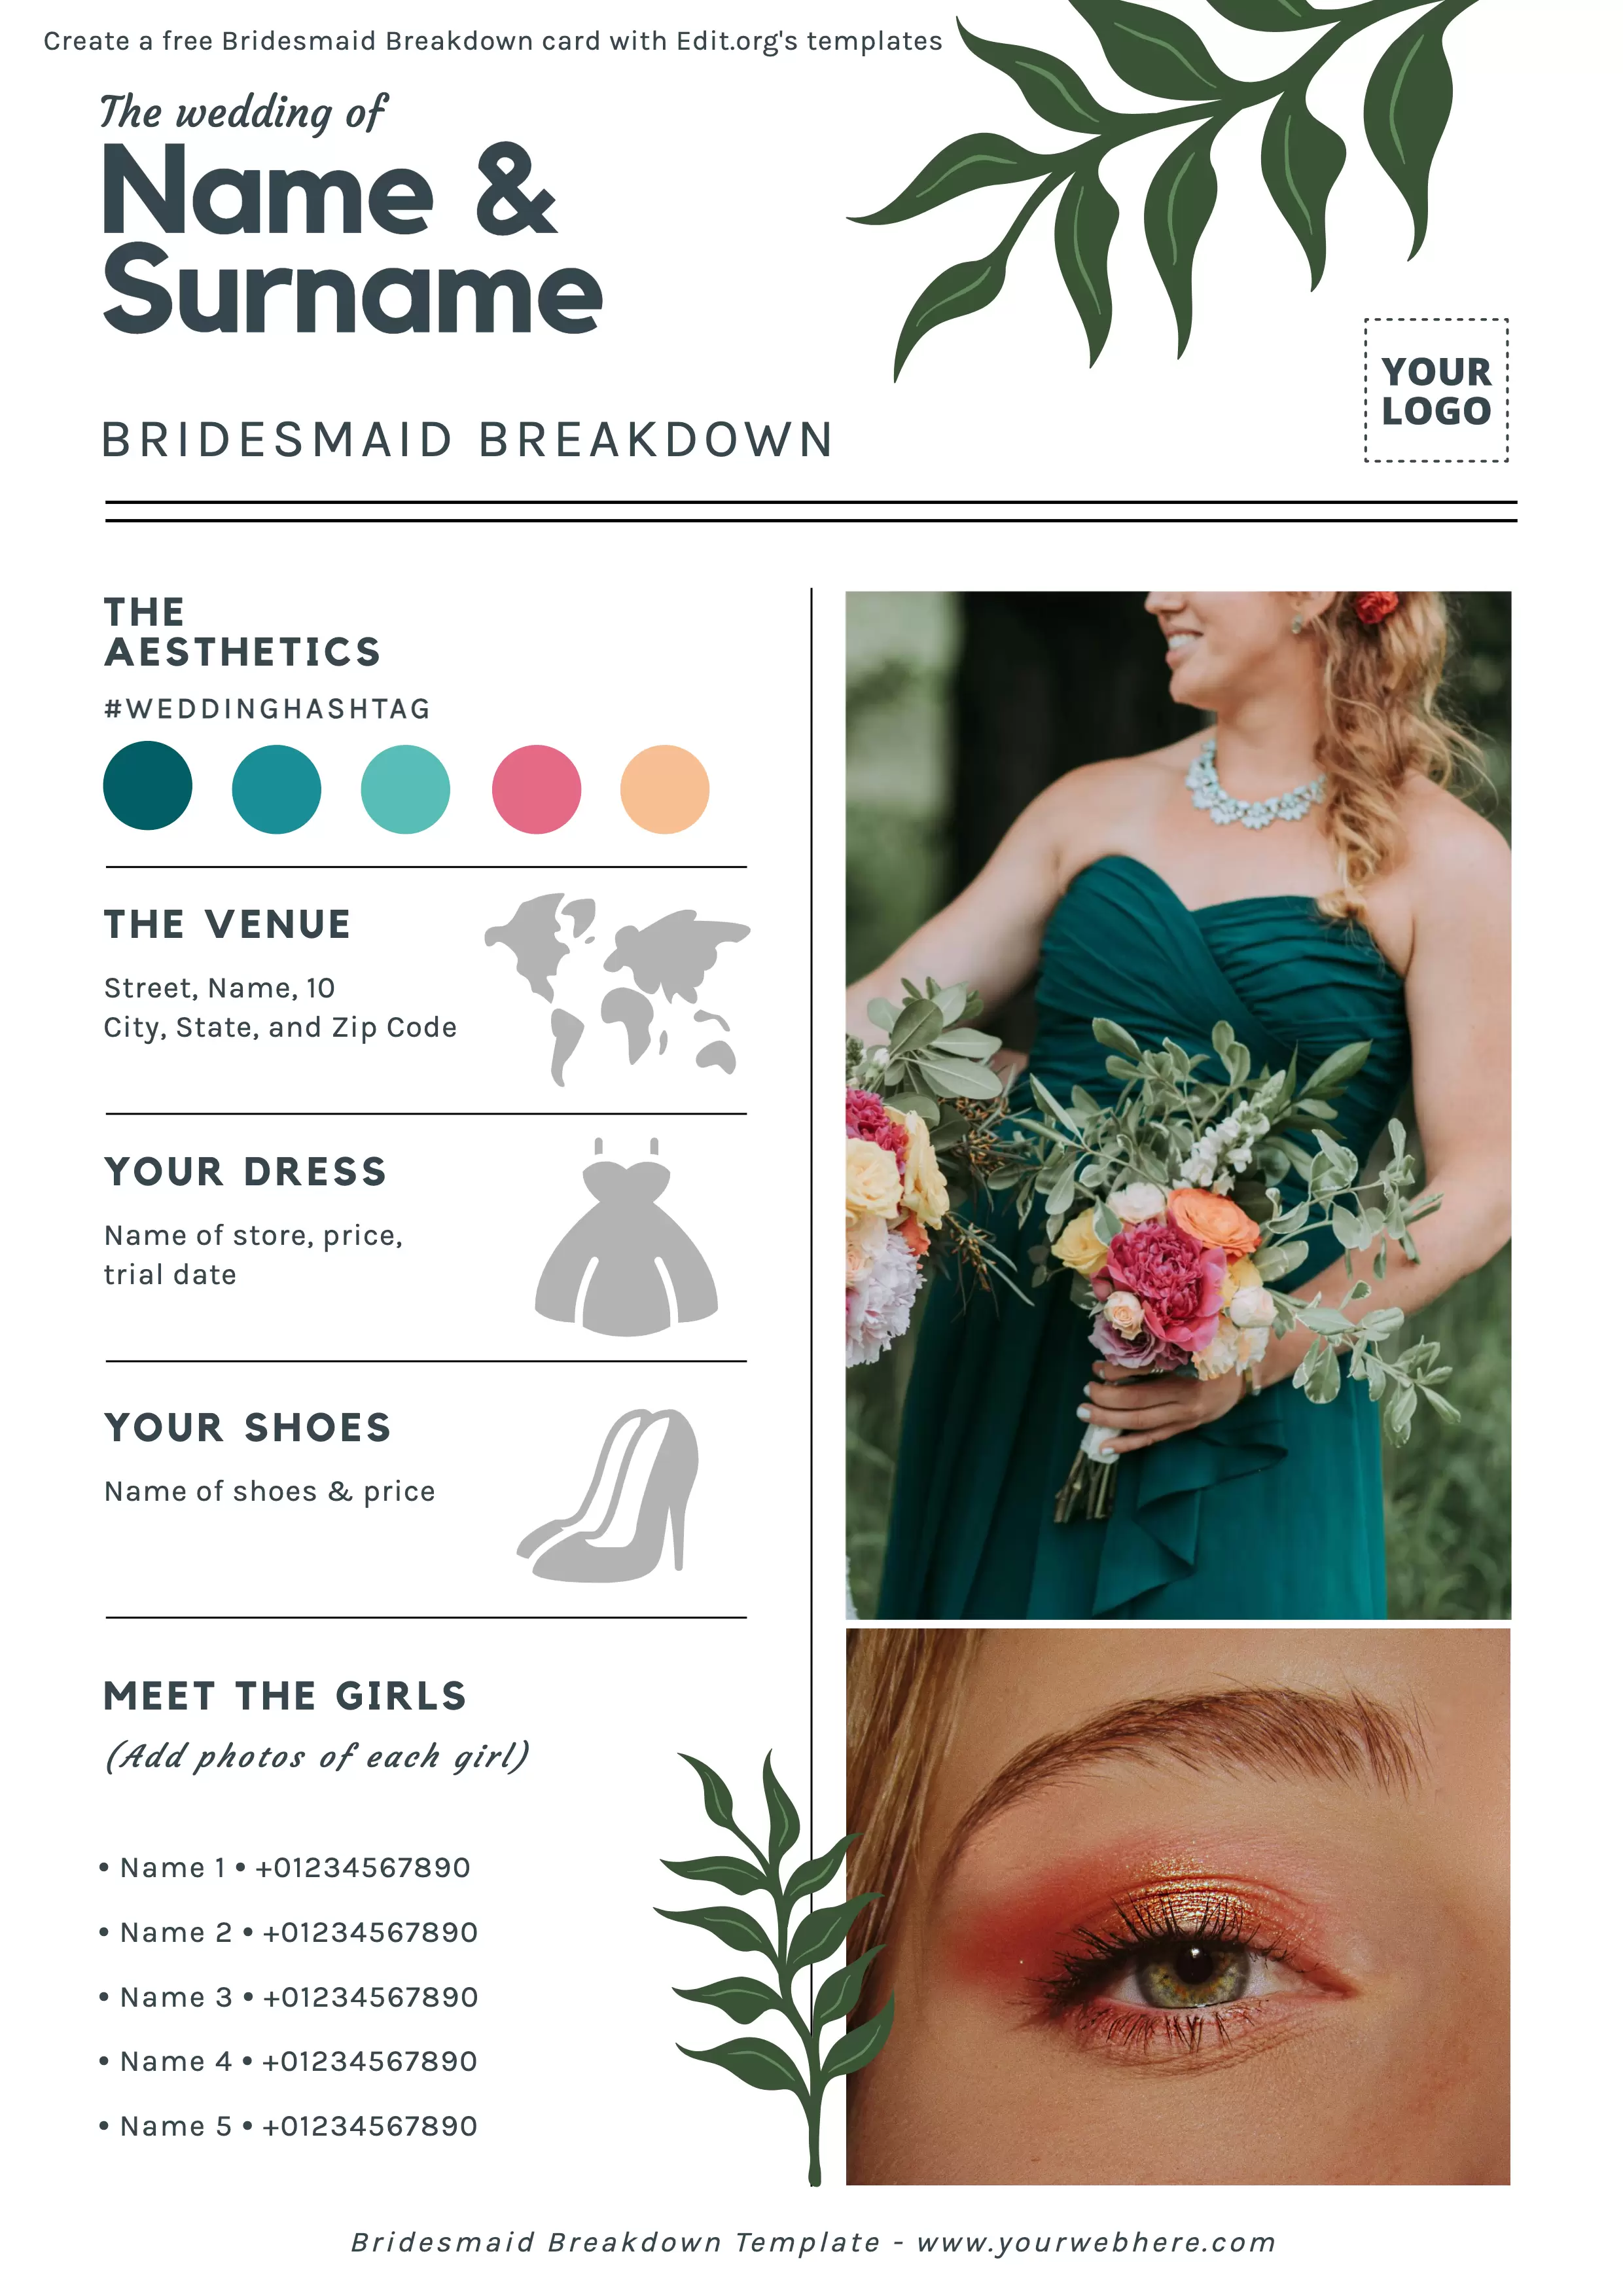 Editable Bridesmaid Breakdown card template for weddings